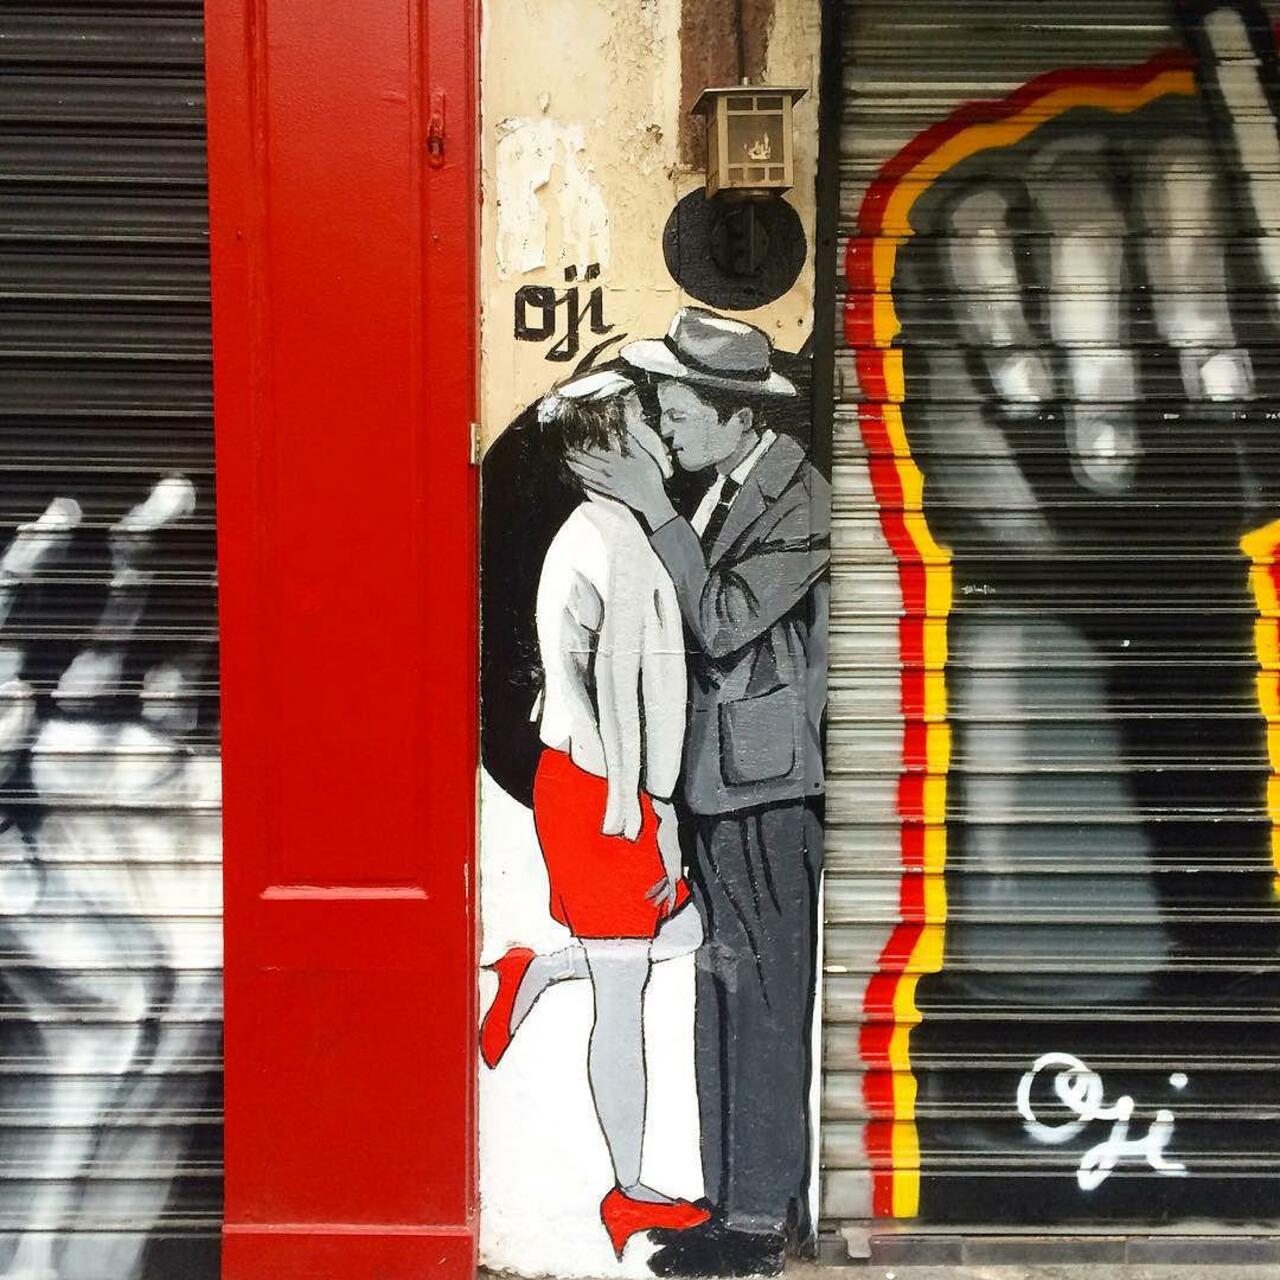 #Paris #graffiti photo by @benapix http://ift.tt/1WPm4dh #StreetArt http://t.co/prrtiWd8jZ